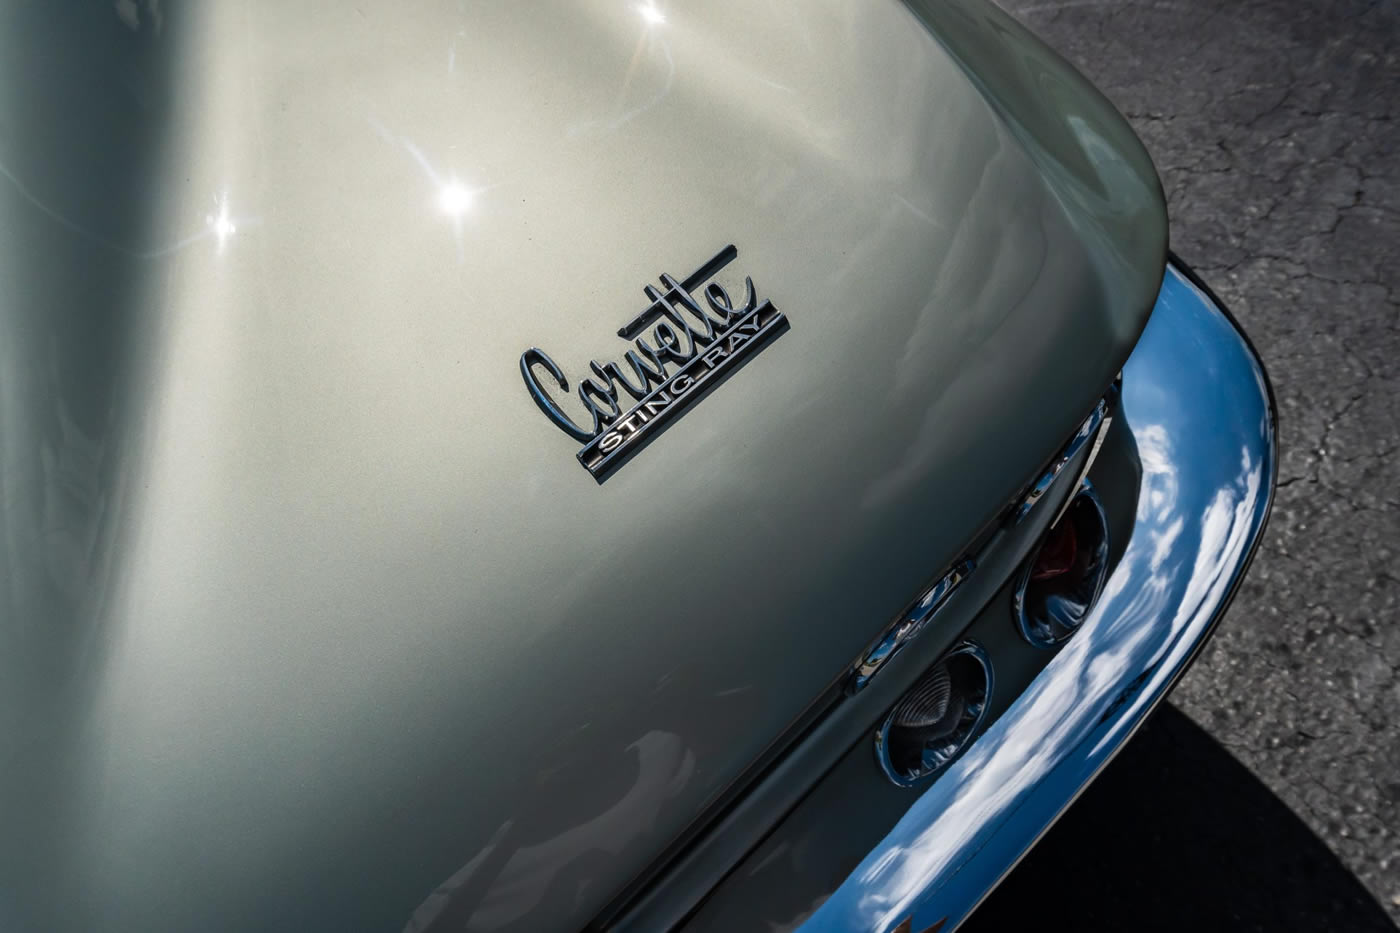 1966 Corvette Coupe in Mosport Green